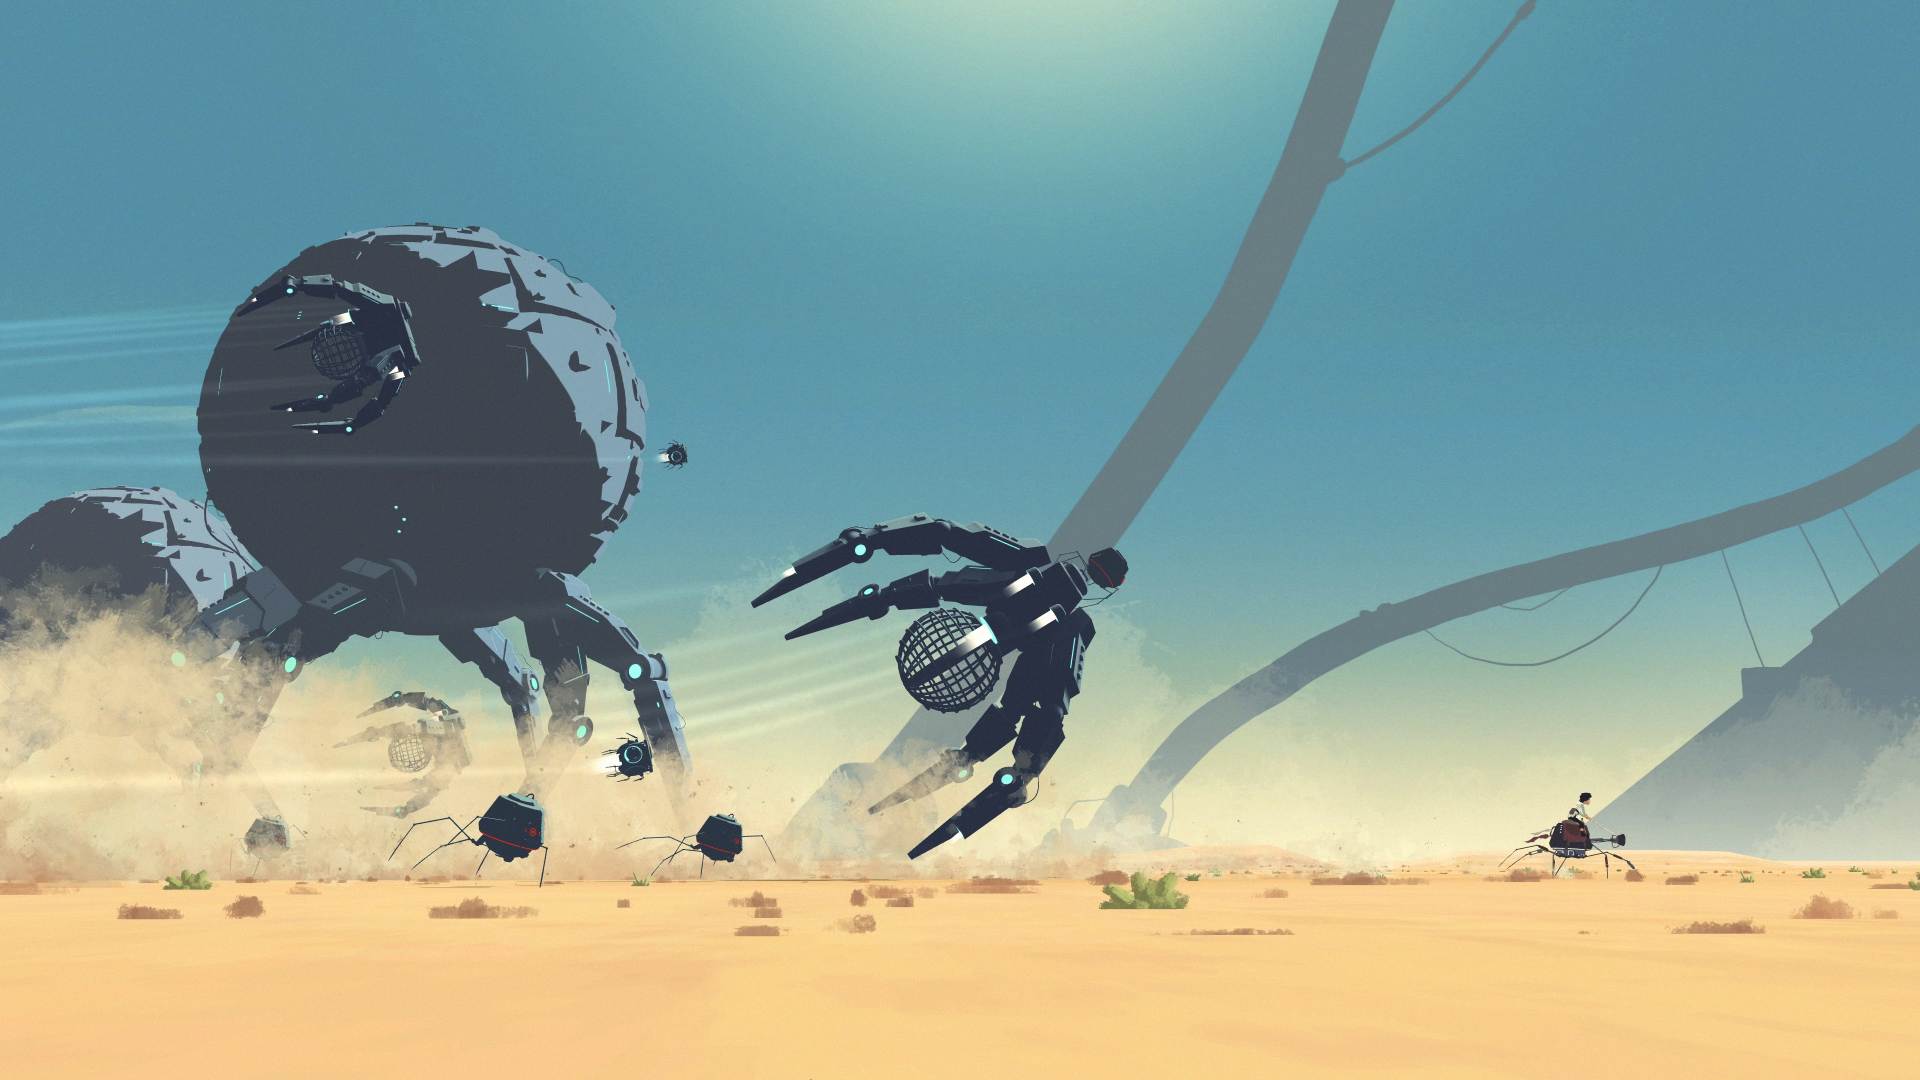 planet of lana gameplay, mechanical ships in the desert